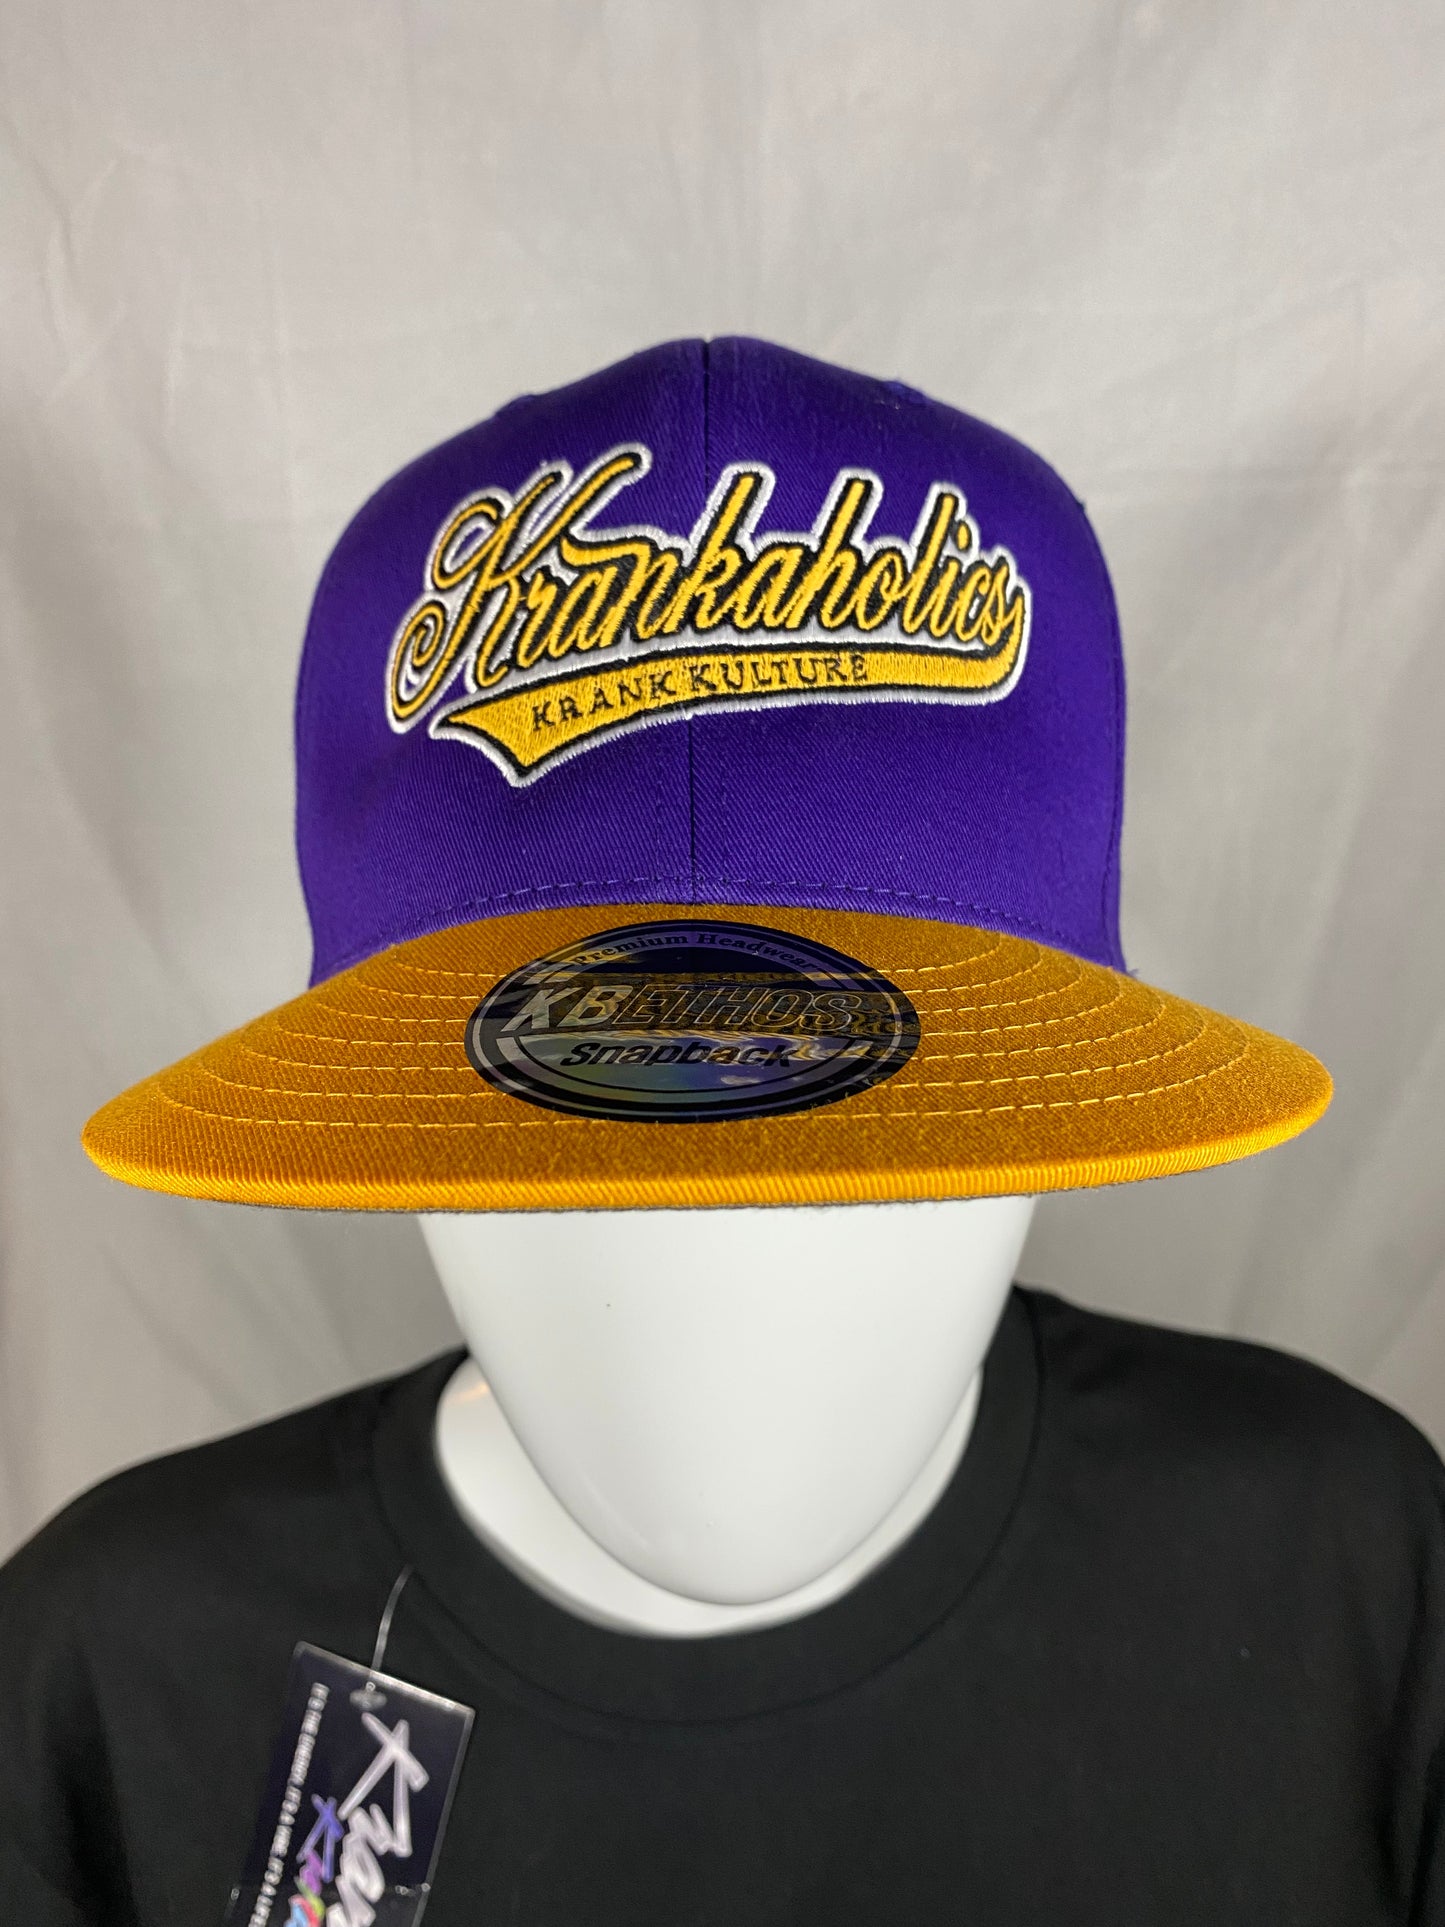 Kulture “Krankaholics” Snapback Baseball Cap